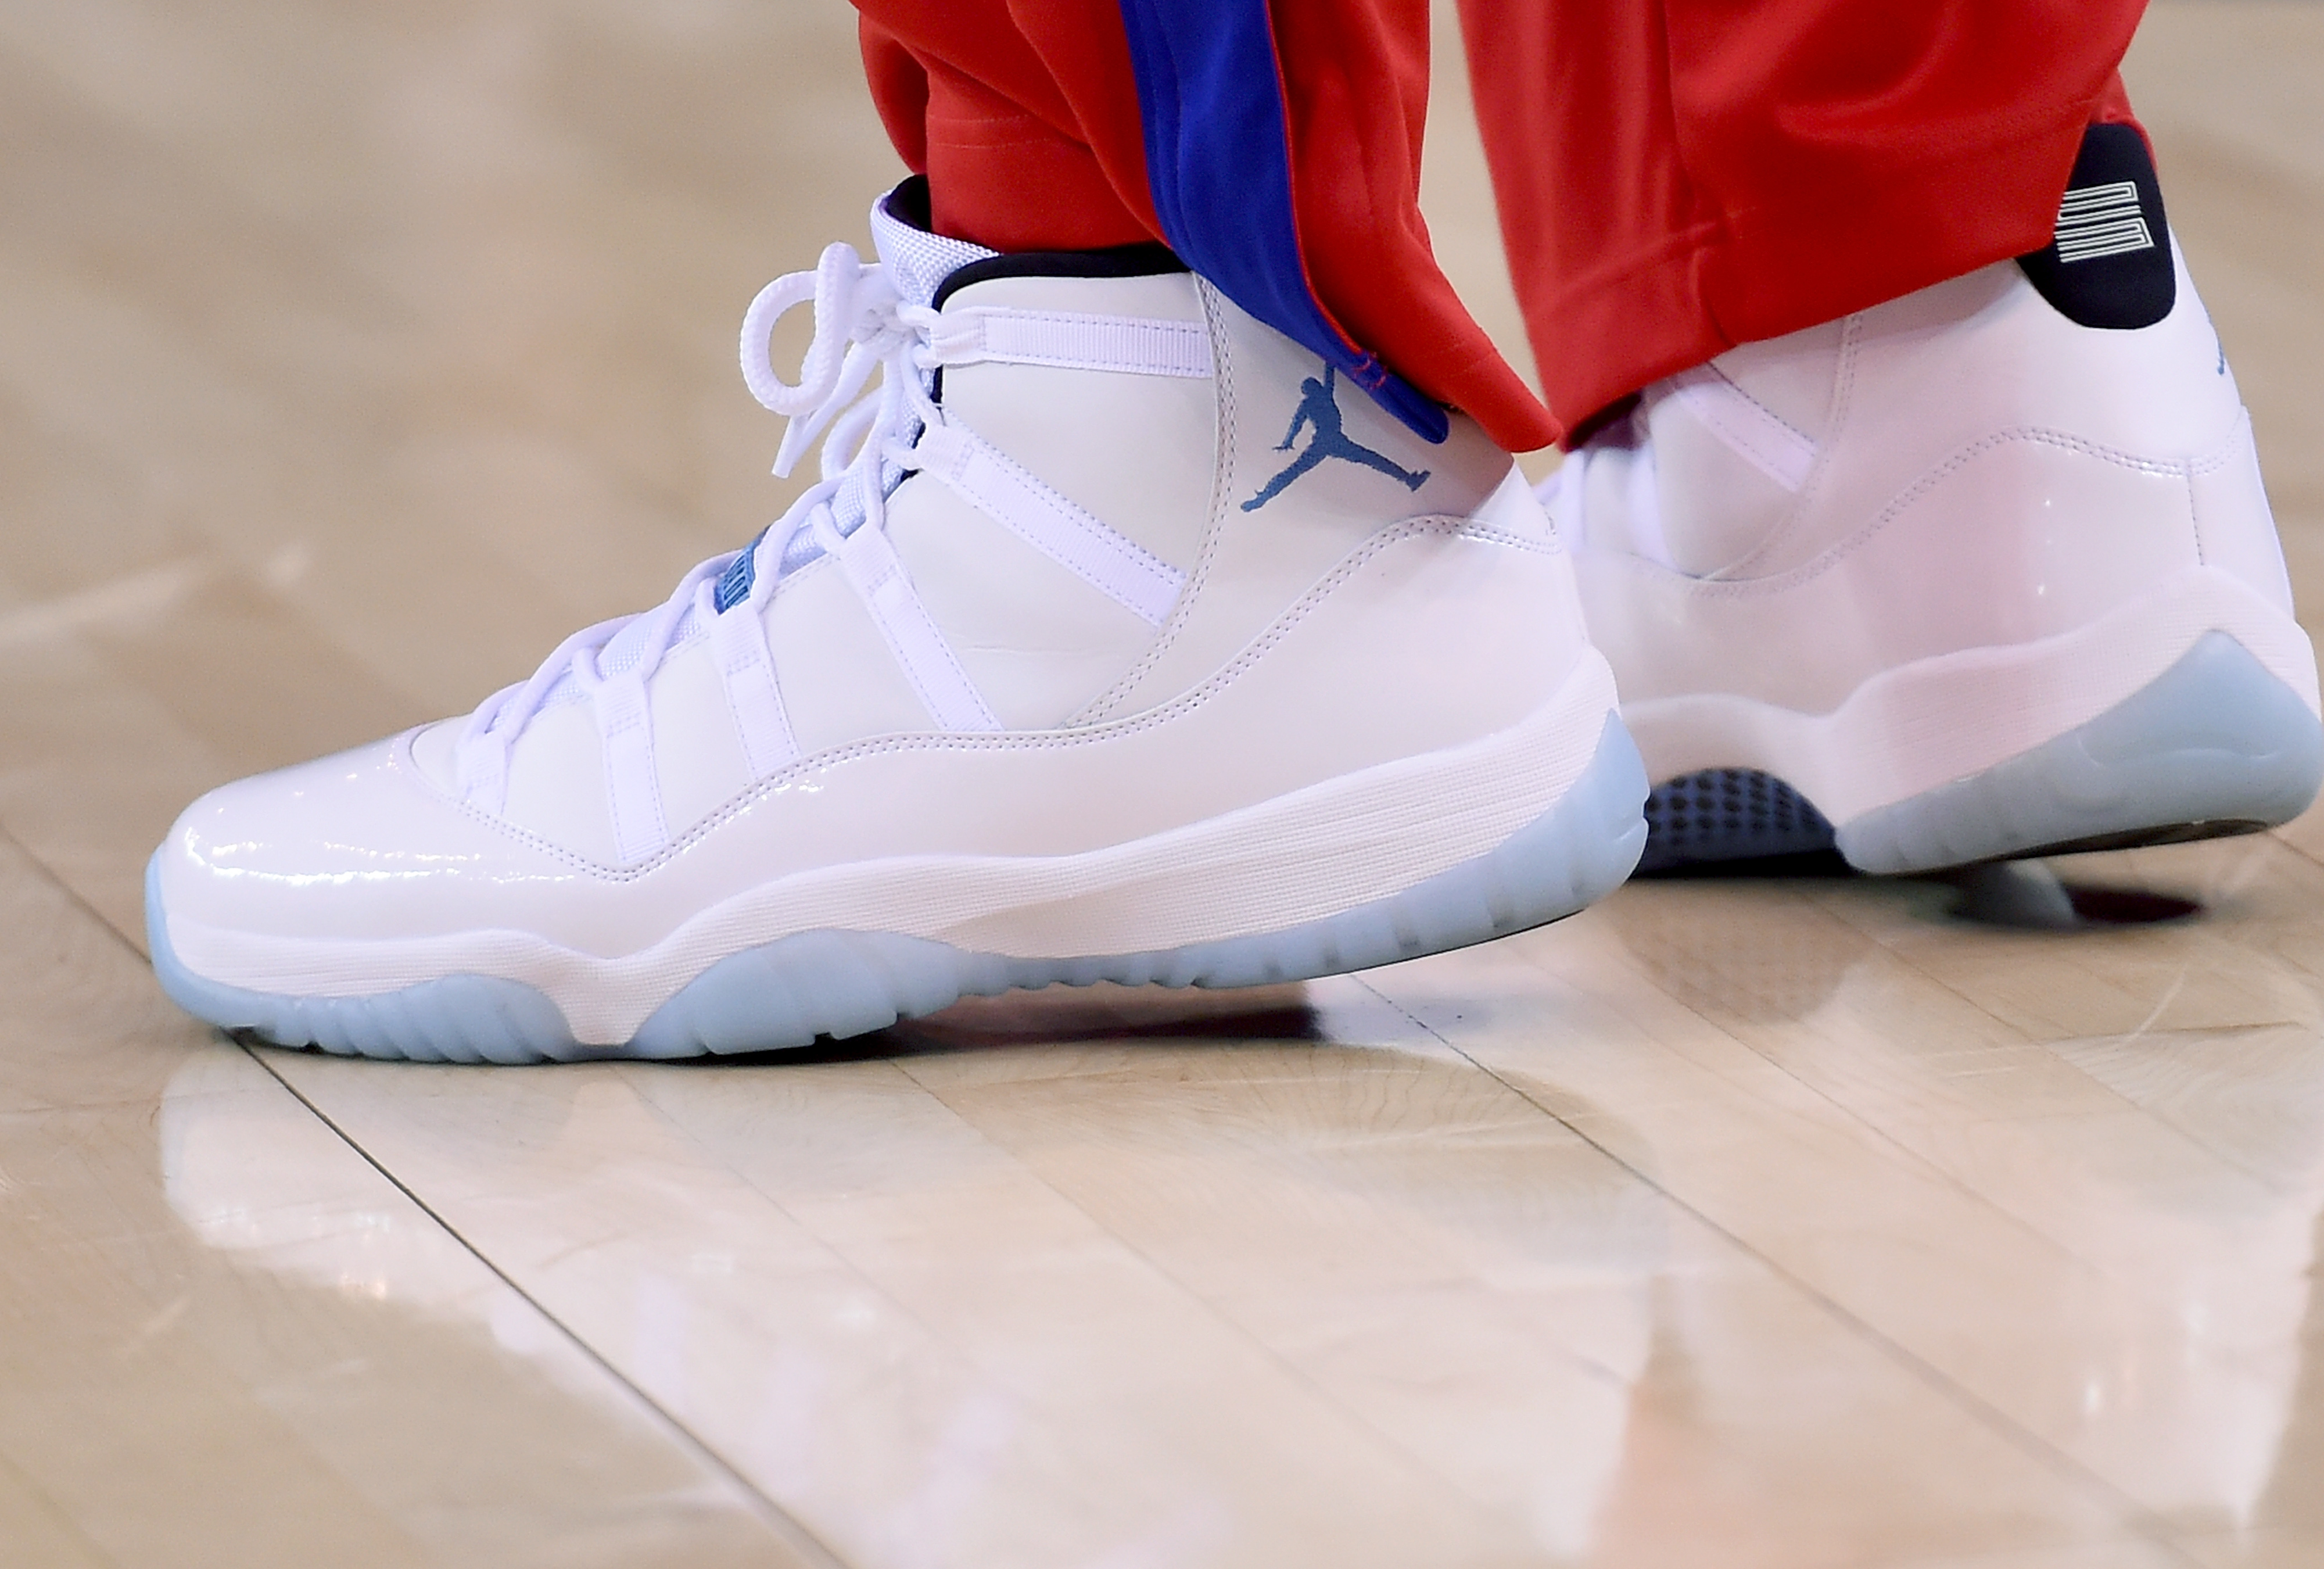 Michael Jordan's Alma Mater Gets New Court and Shoe Display